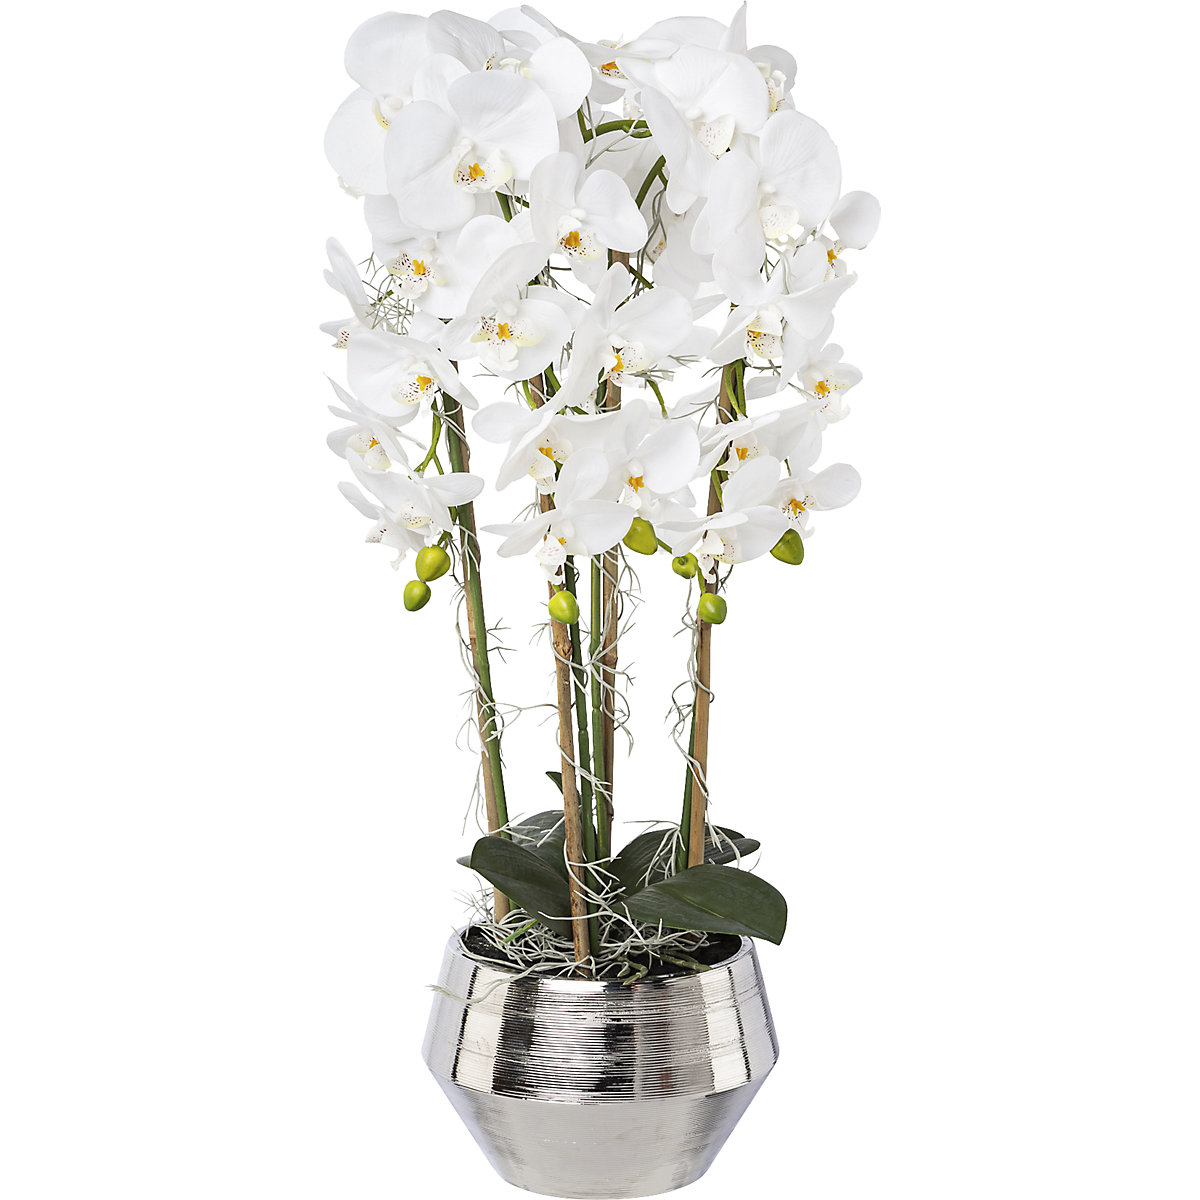 Orchidea Phalenopsis: in vaso d'argento